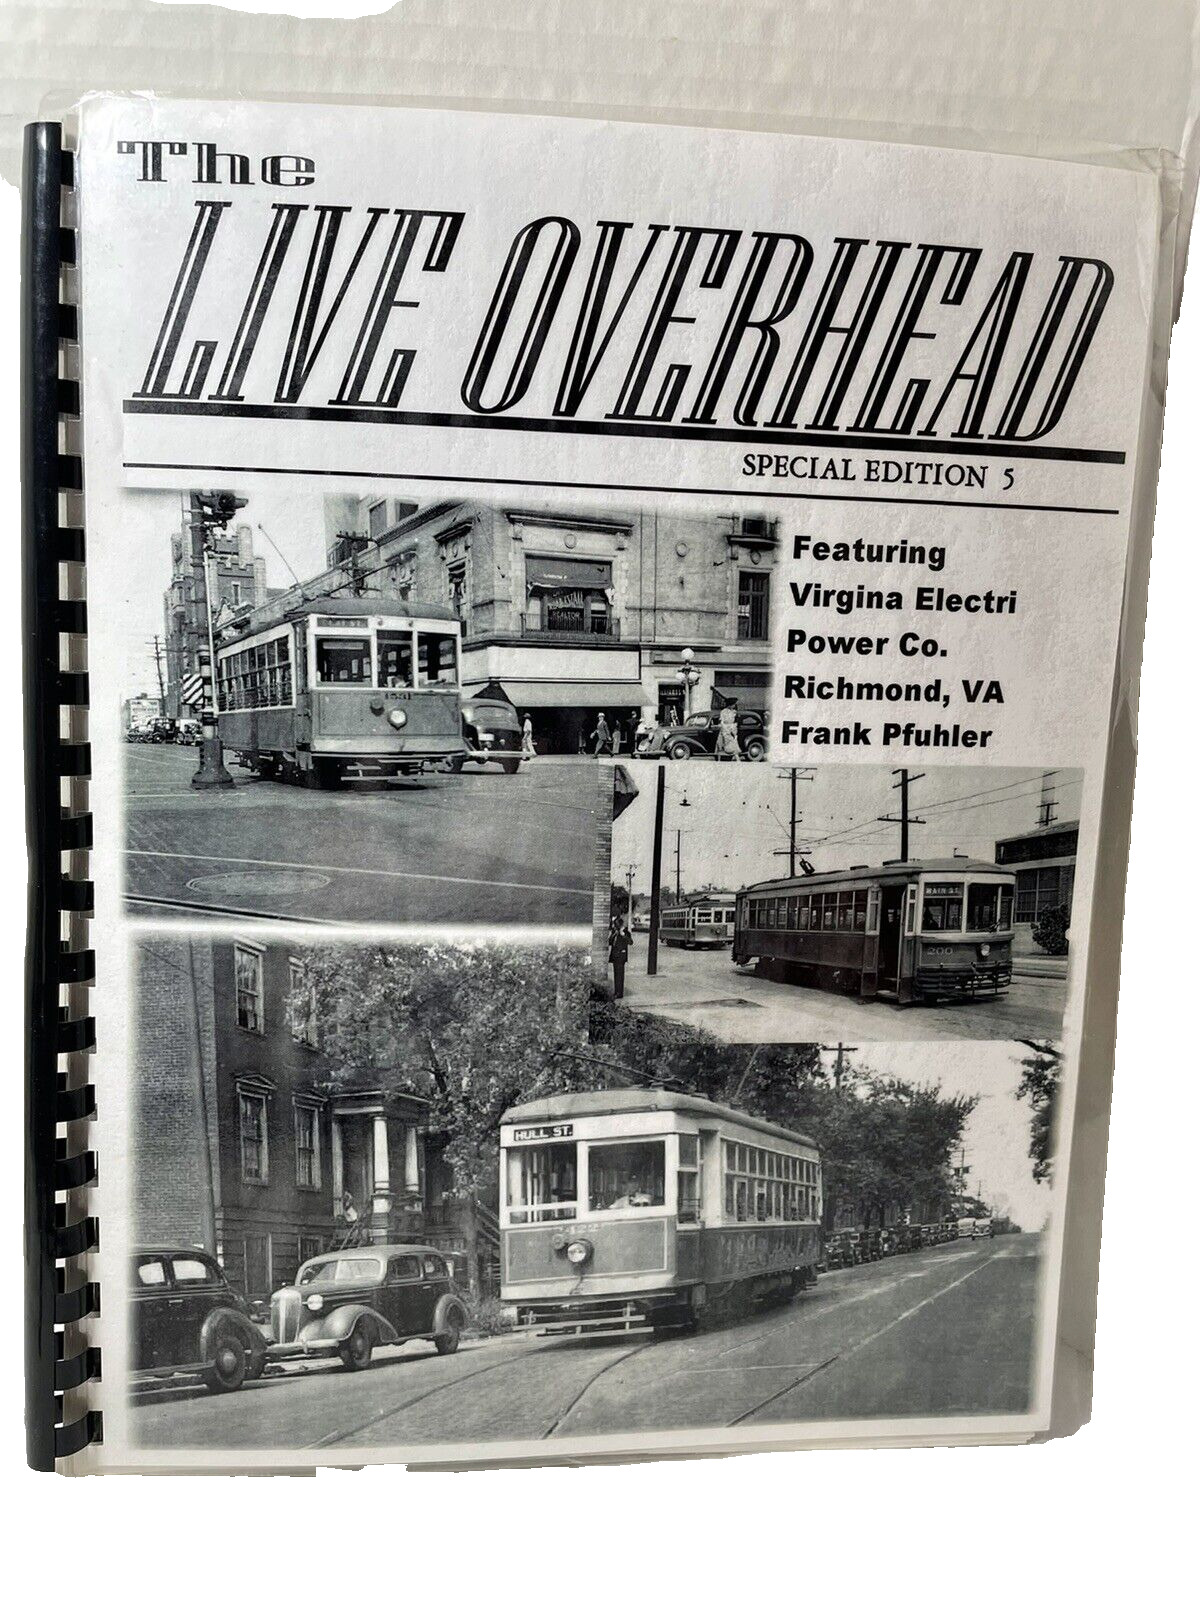 Live Overhead book Virginia Electric Co Trains 1901 70 photos Frank Pfuhler